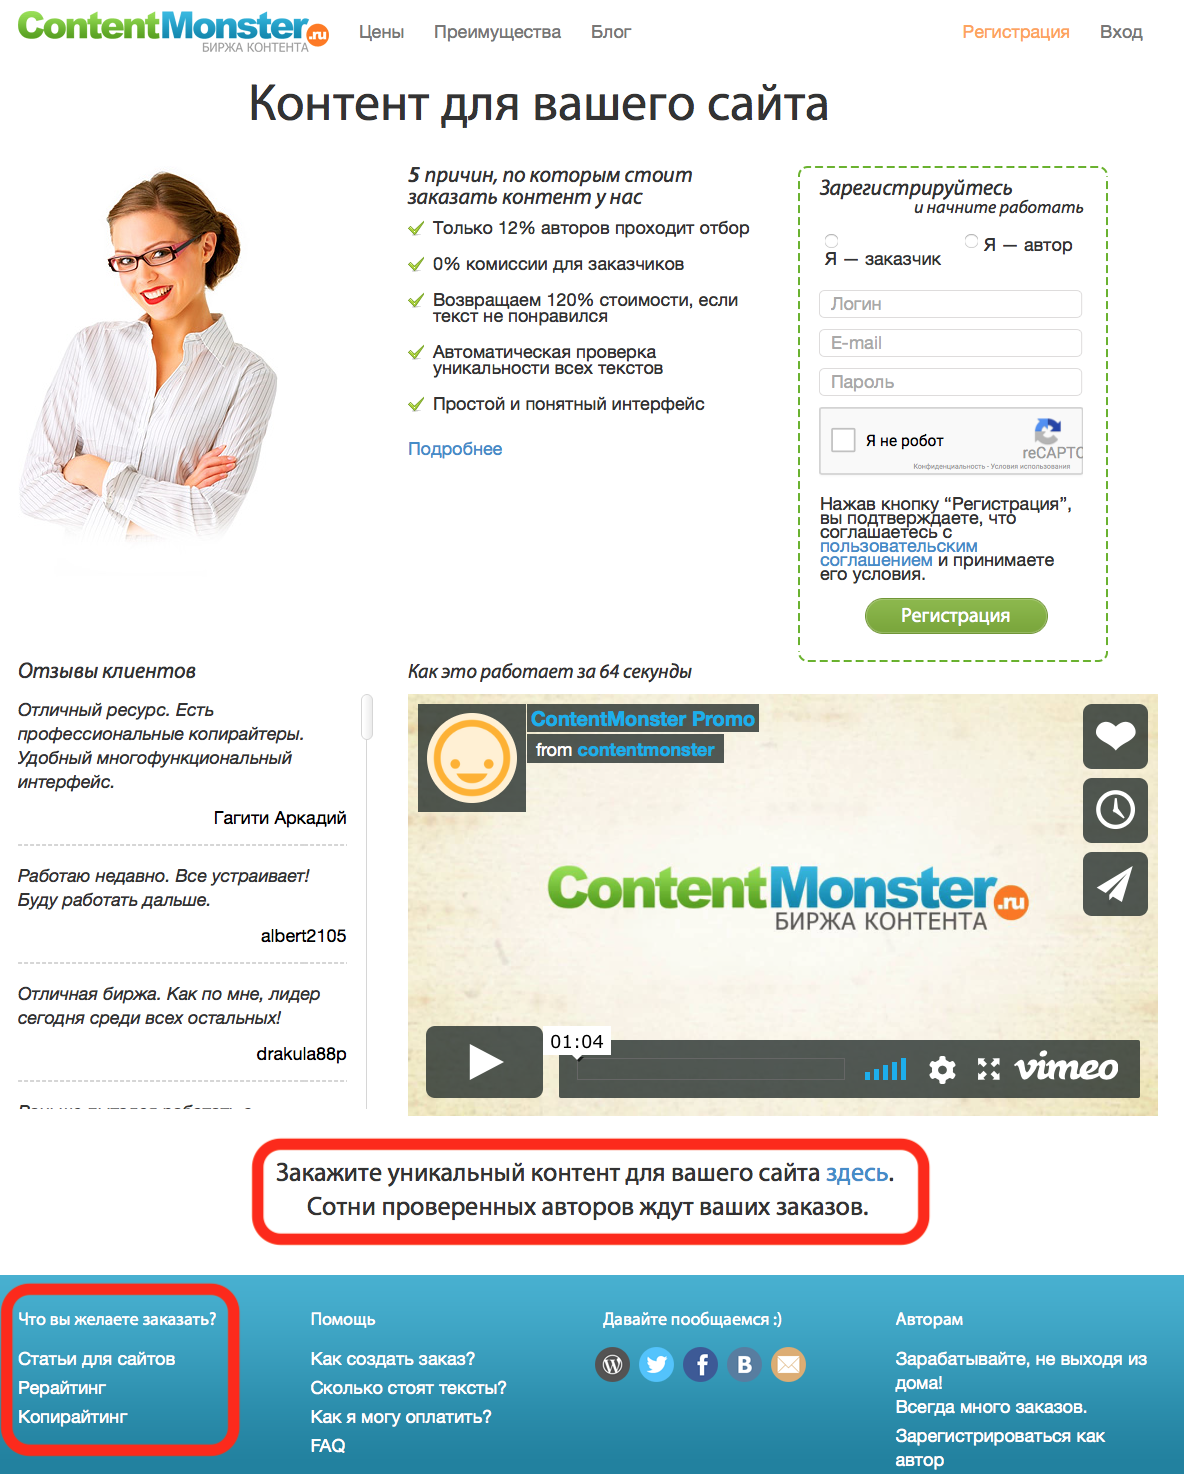 Биржа контента Contentmonster.ru